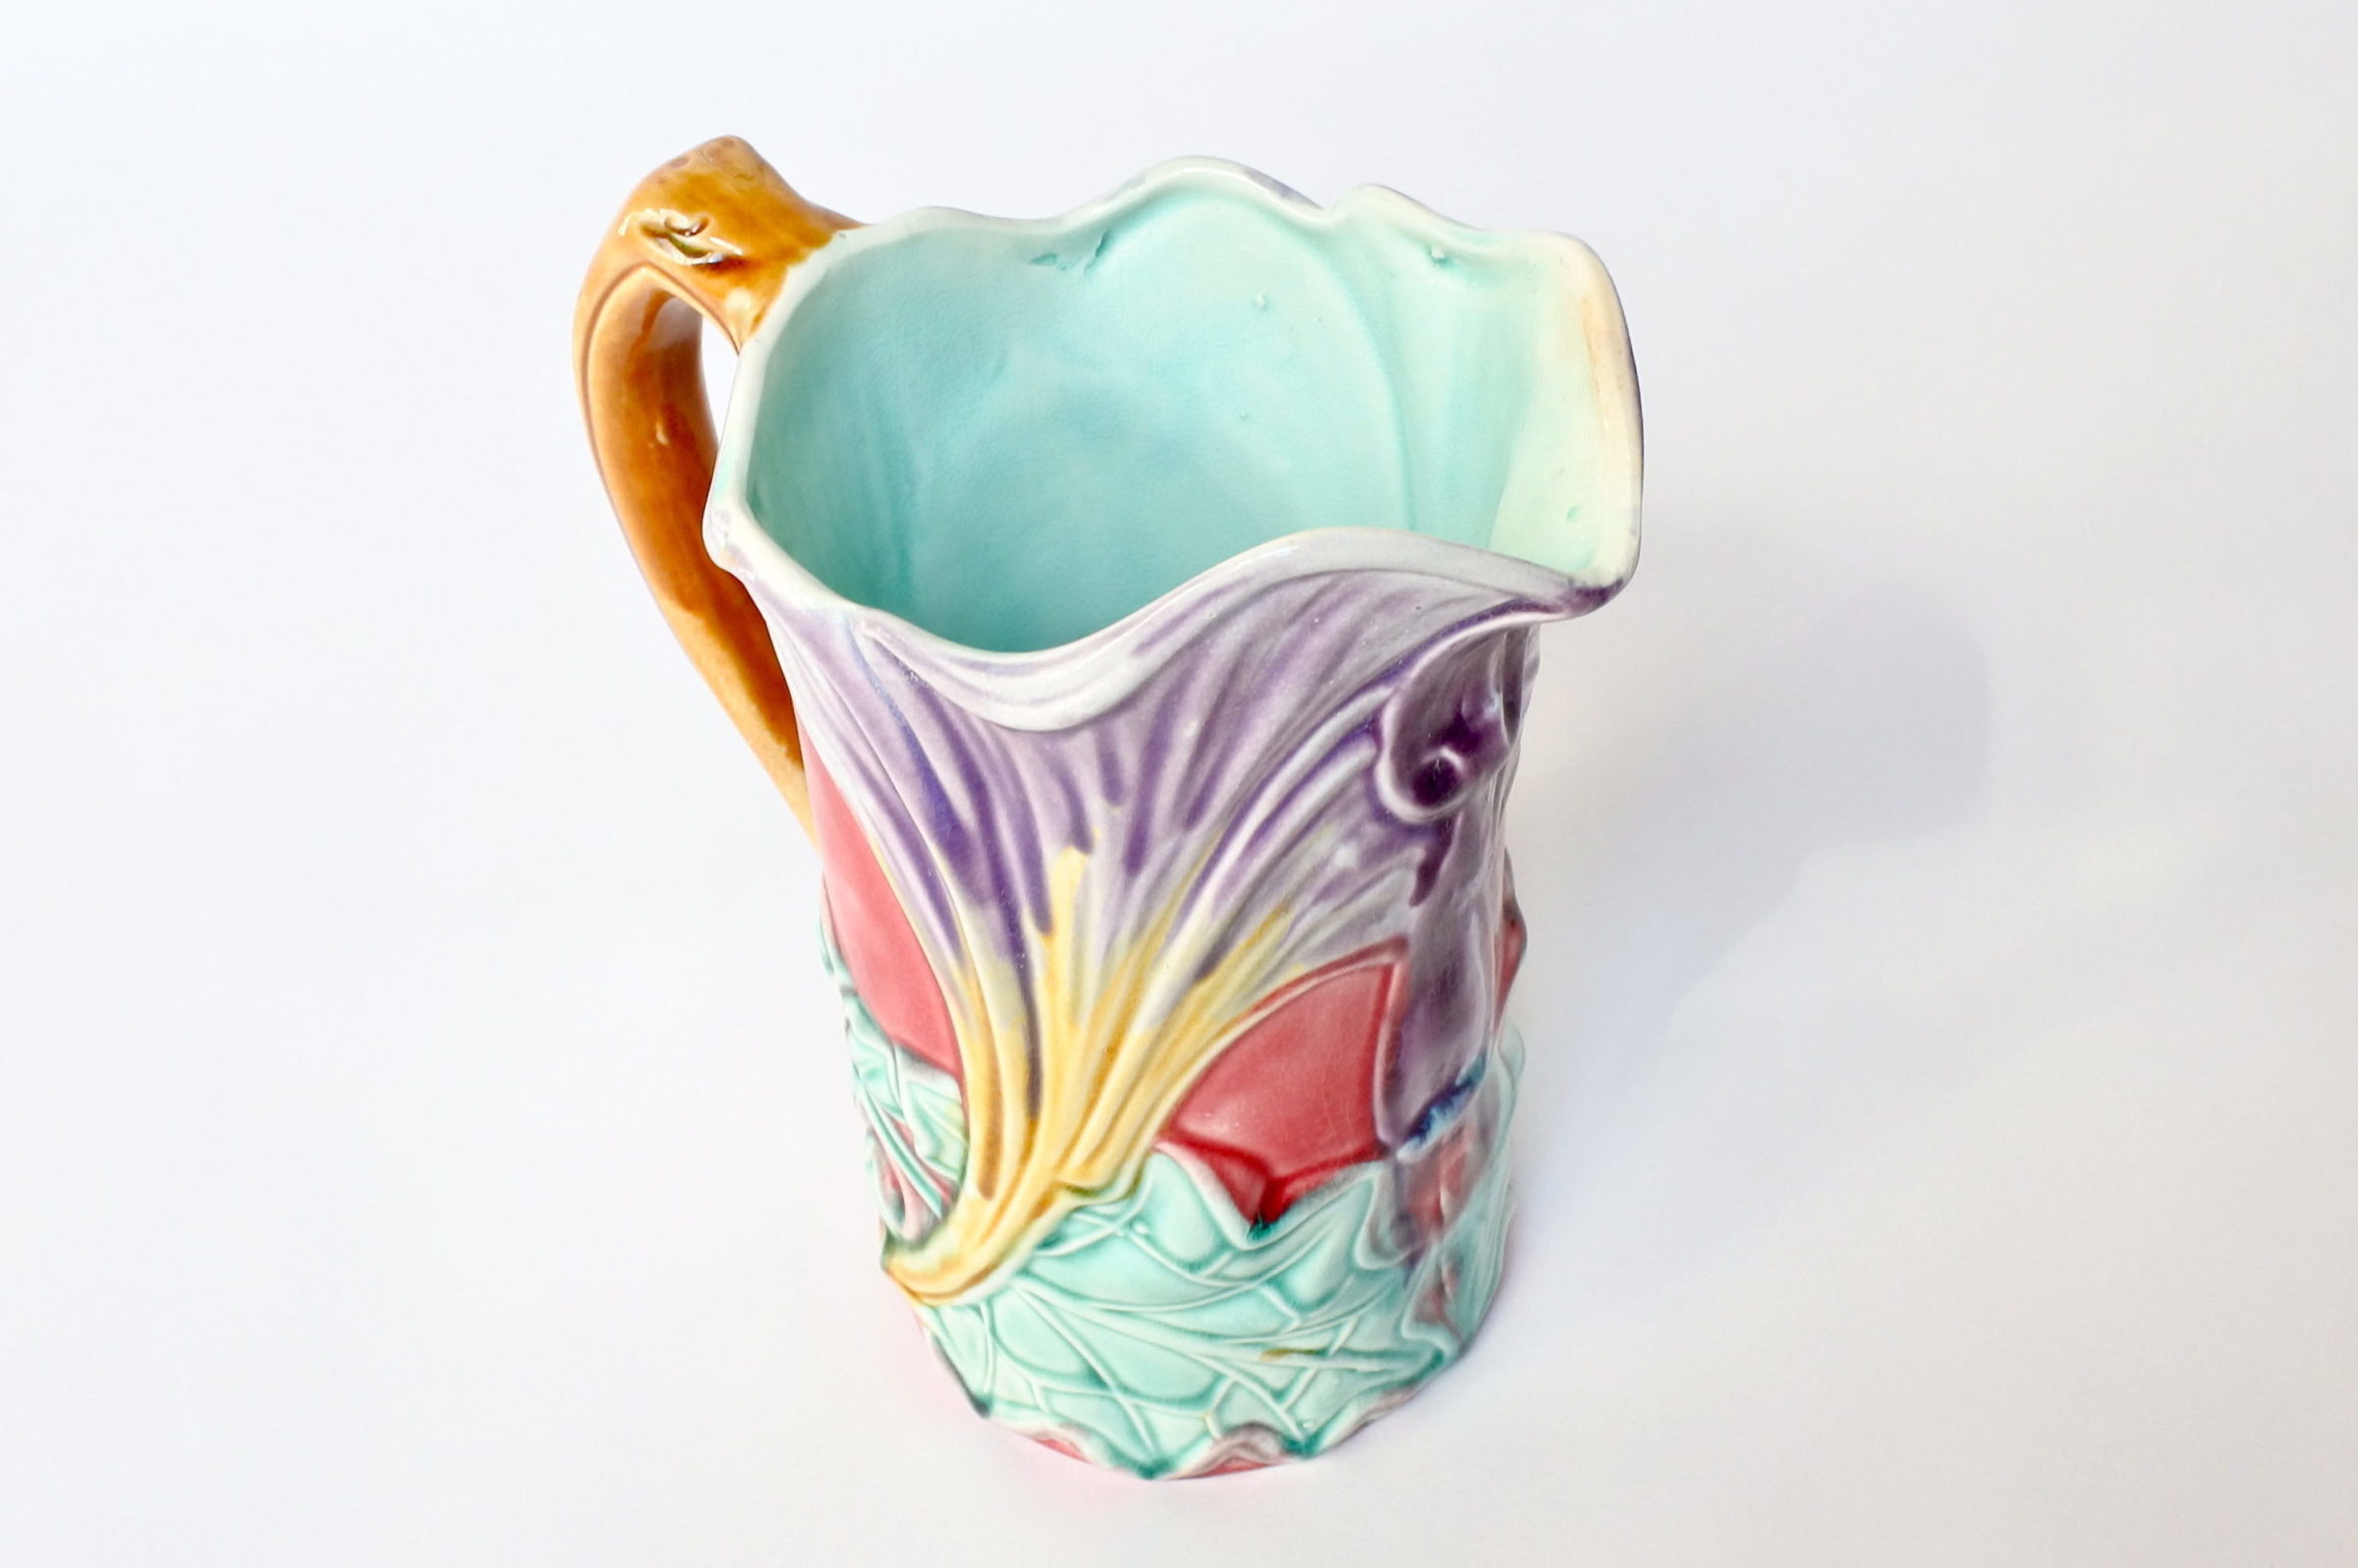 Brocca in ceramica barbotine con calla - Onnaing n° 828 - 5